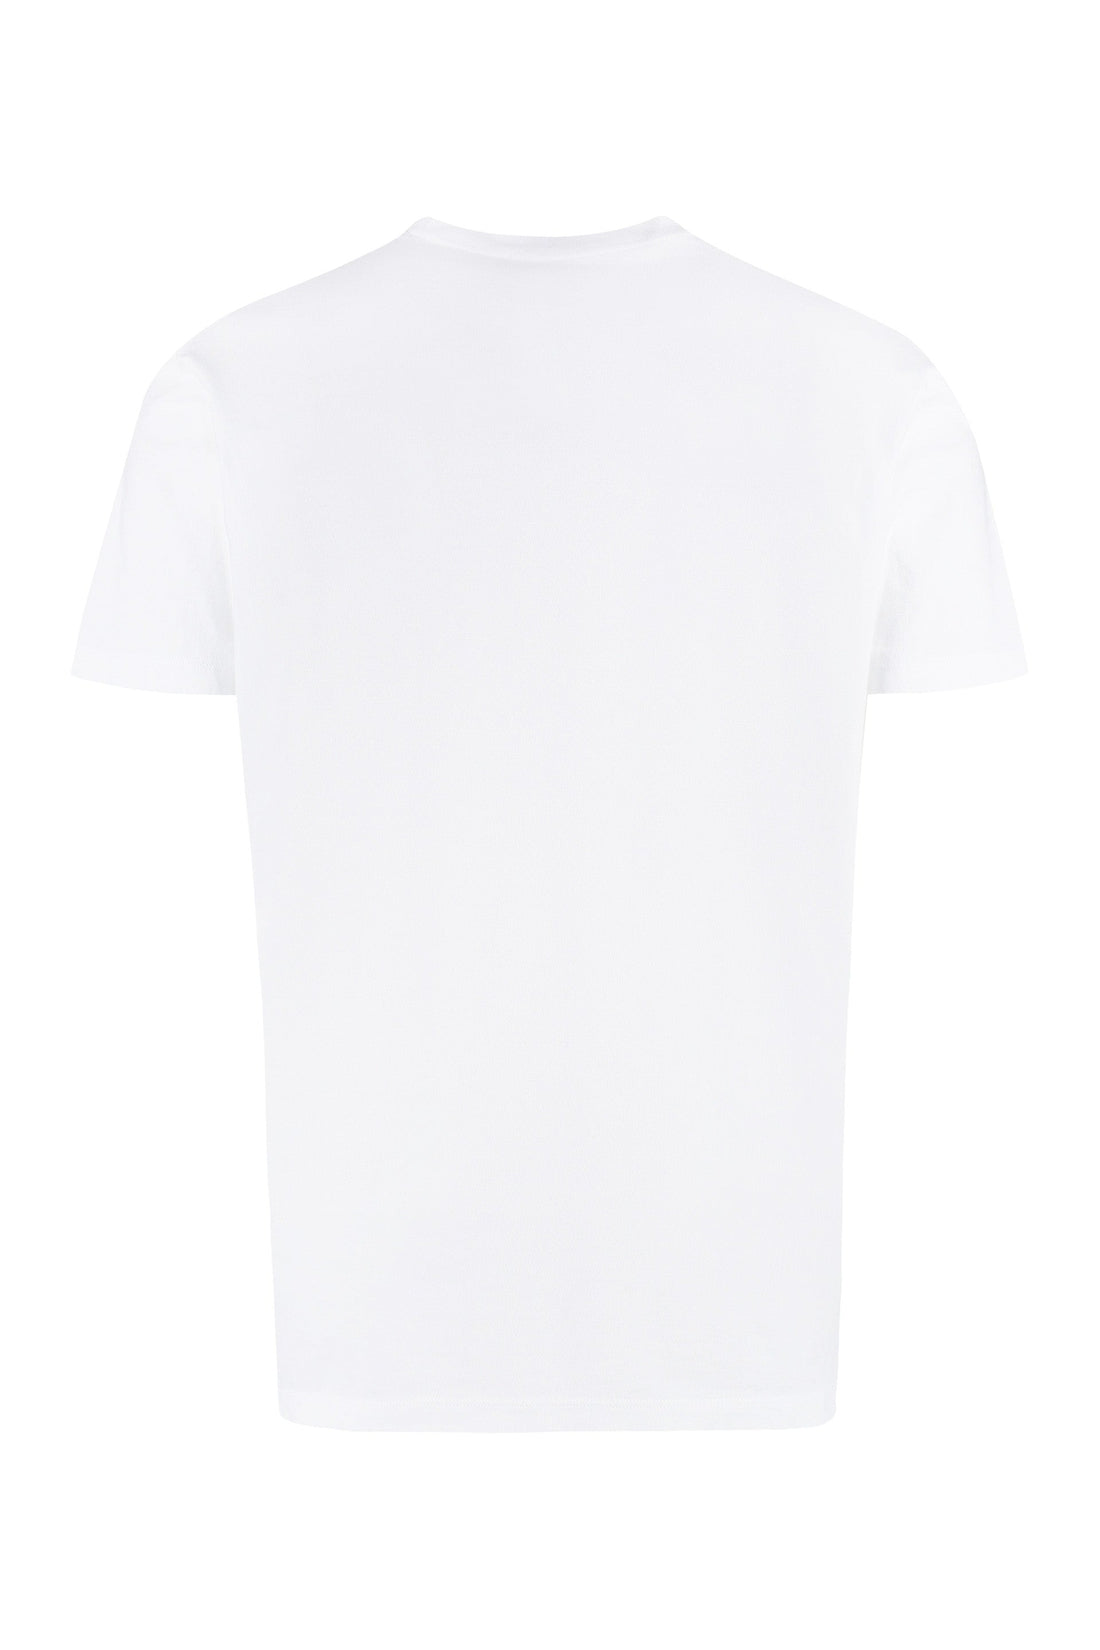 Dsquared2-OUTLET-SALE-Printed stretch cotton T-shirt-ARCHIVIST